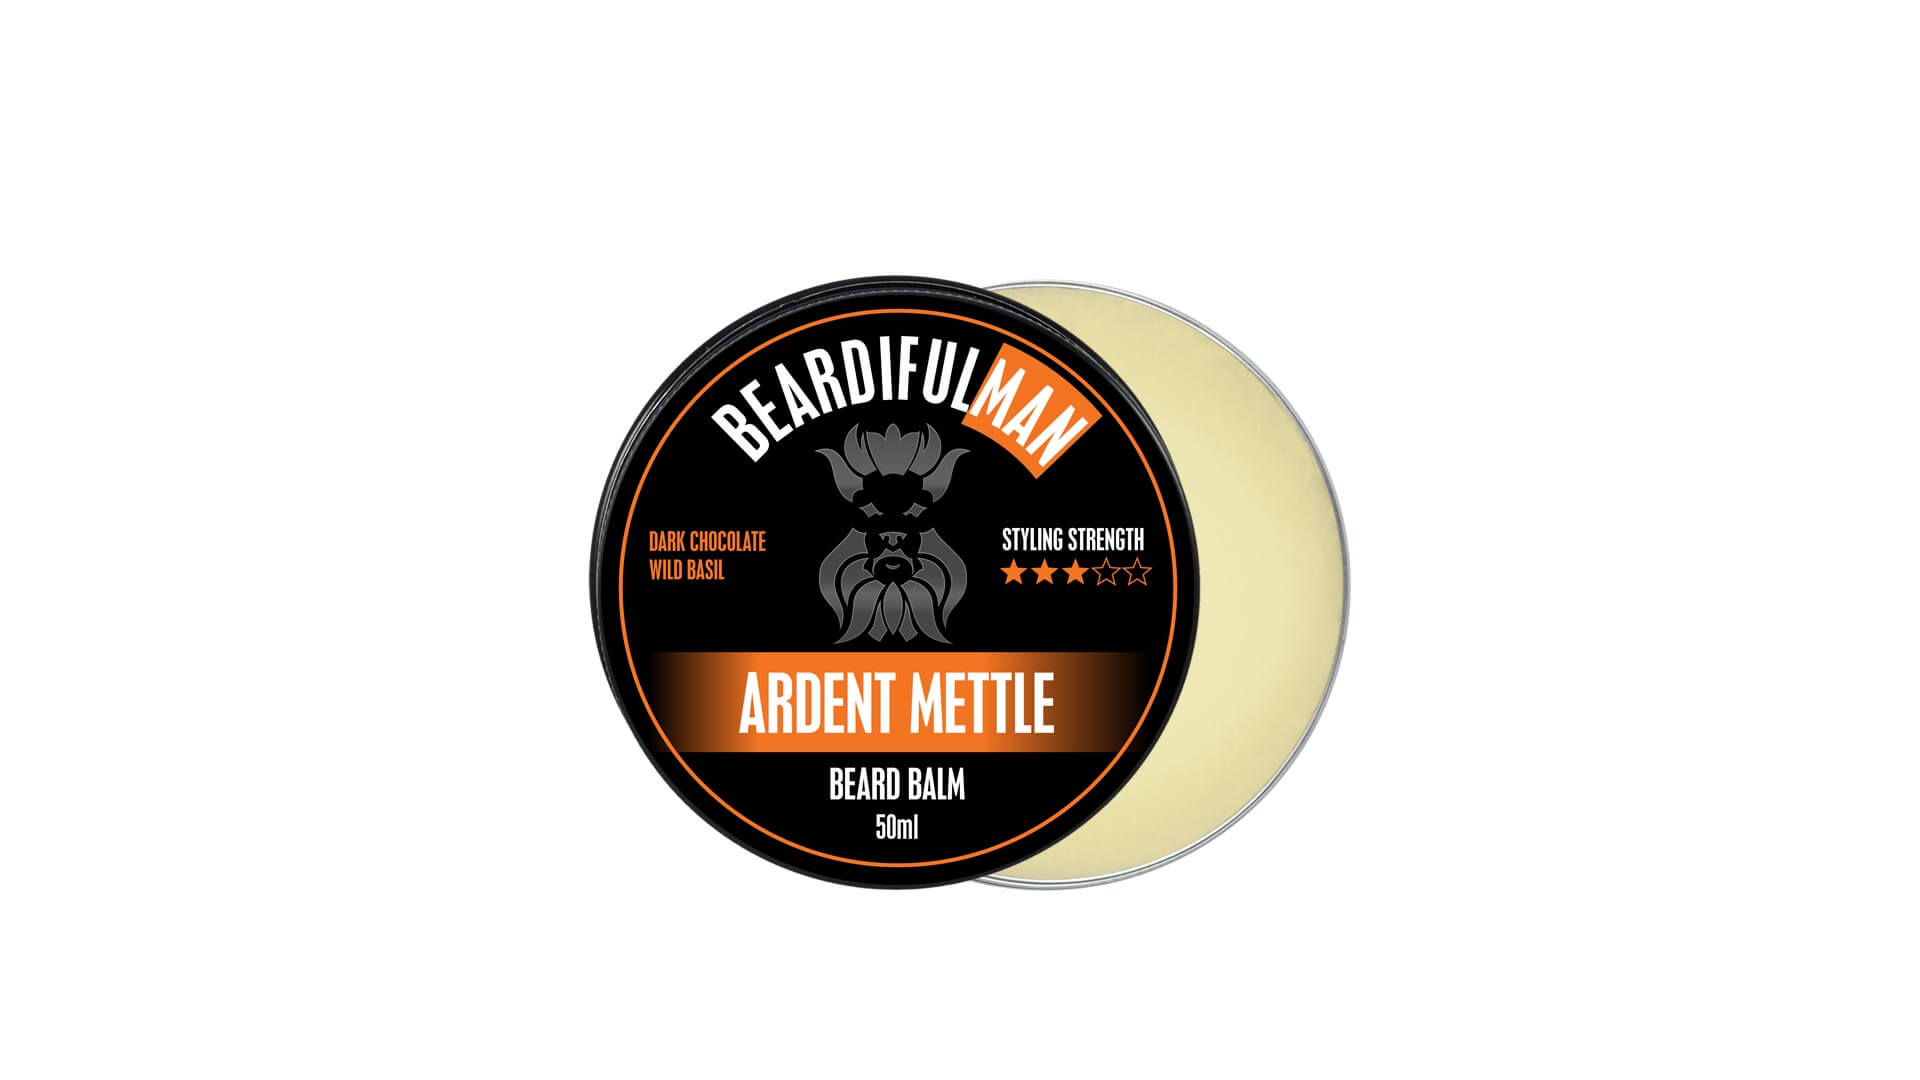 Ardent Mettle premium quality beard balm from Beardifulman